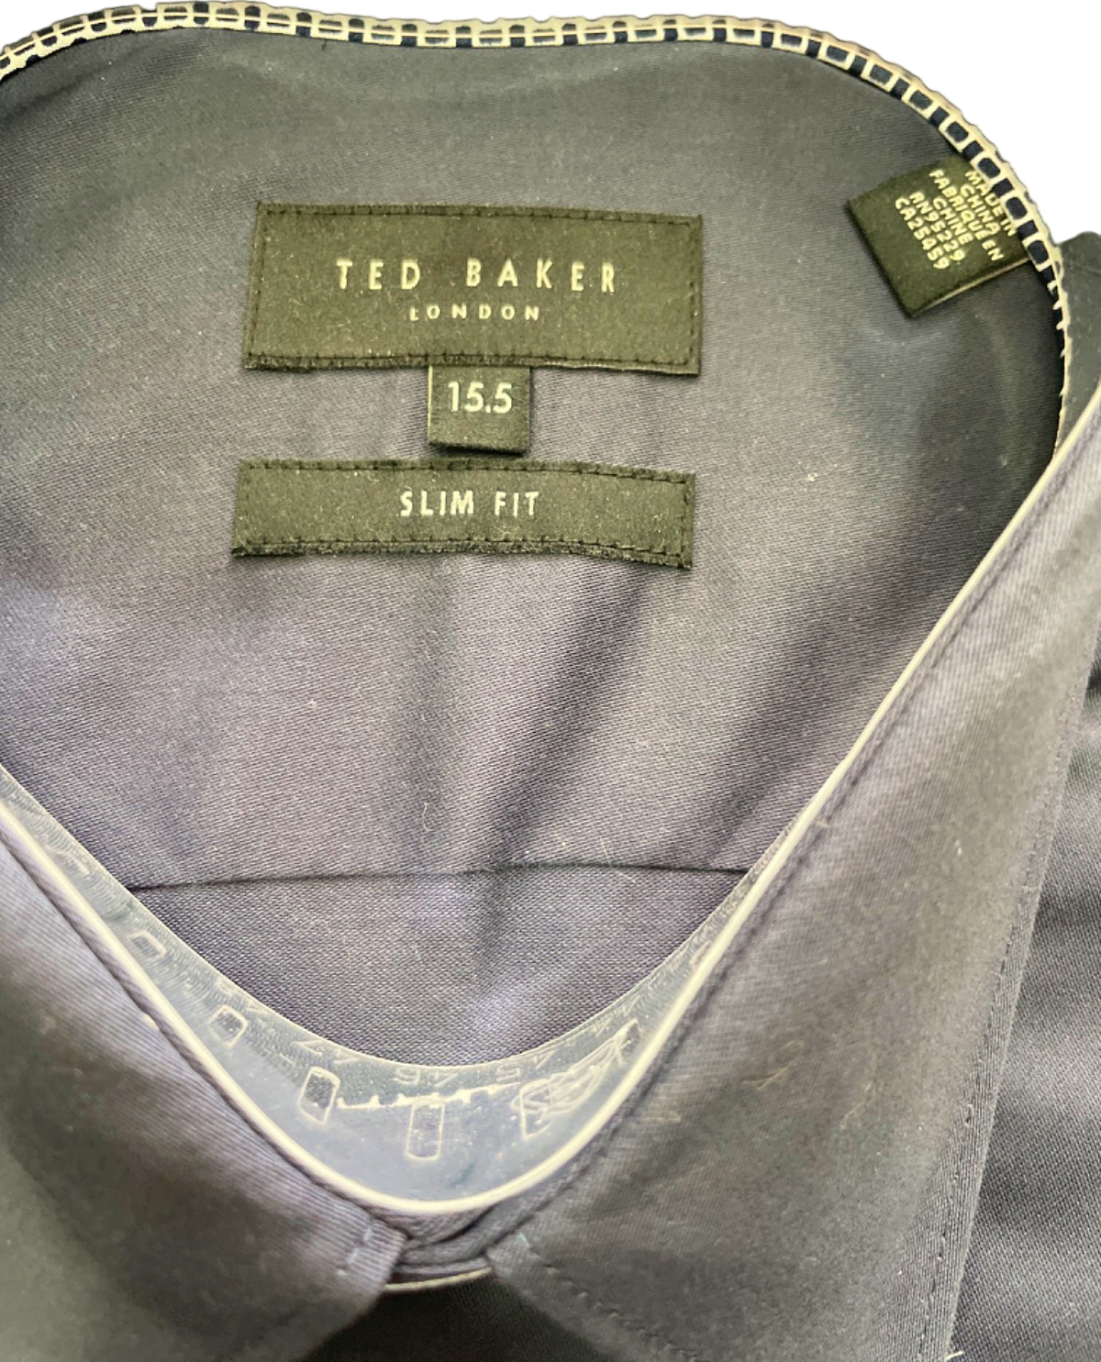 Ted Baker Navy Duddon Core Steel Slim fit Shirt UK 15.5" Neck